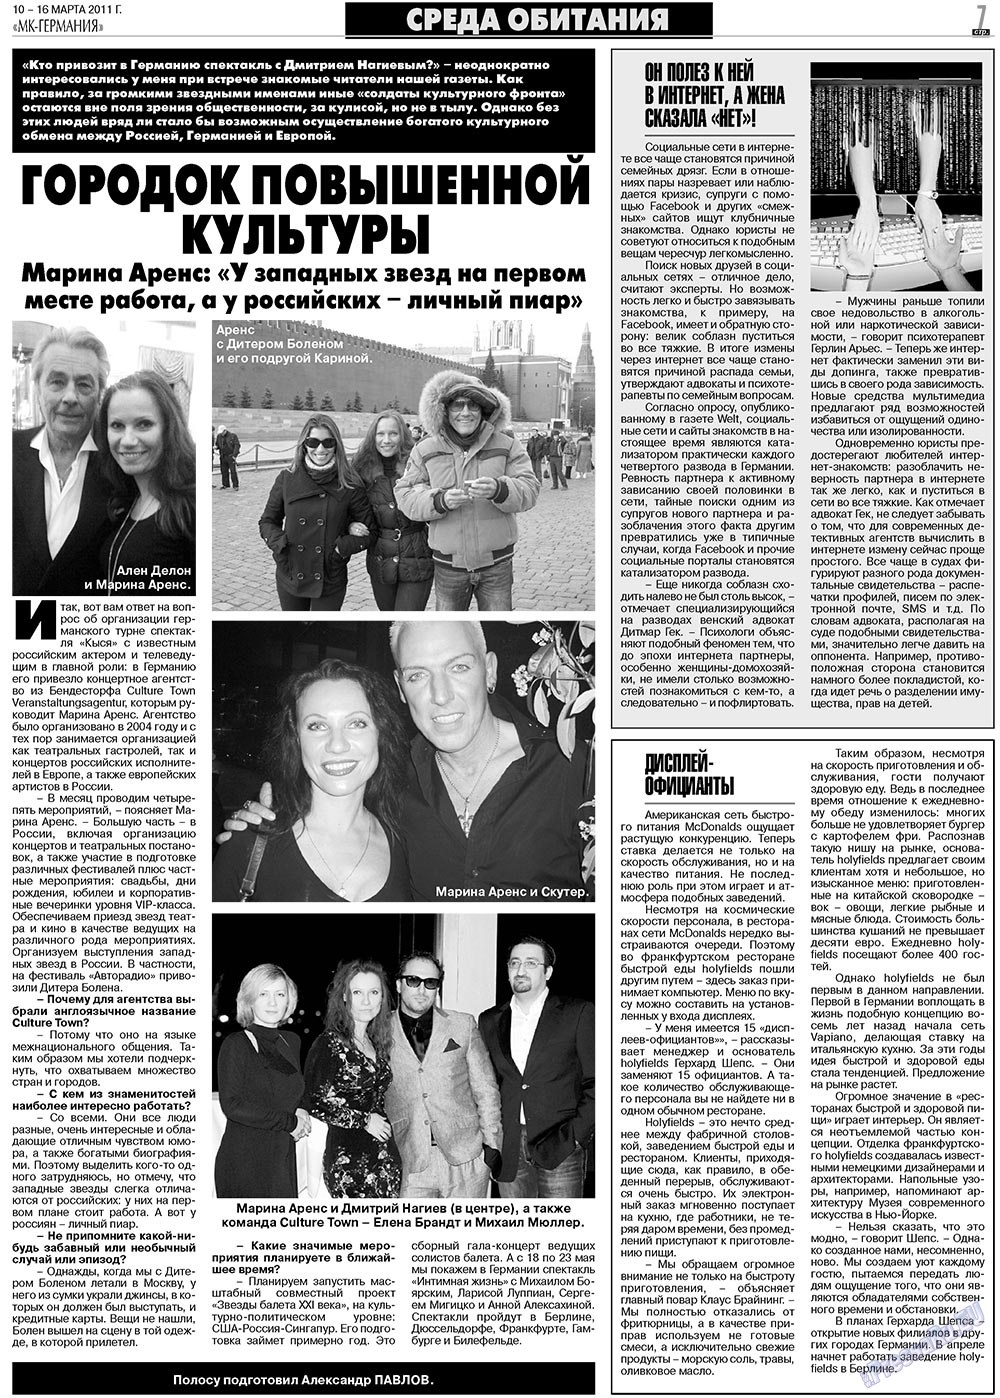 МК-Германия, газета. 2011 №10 стр.7